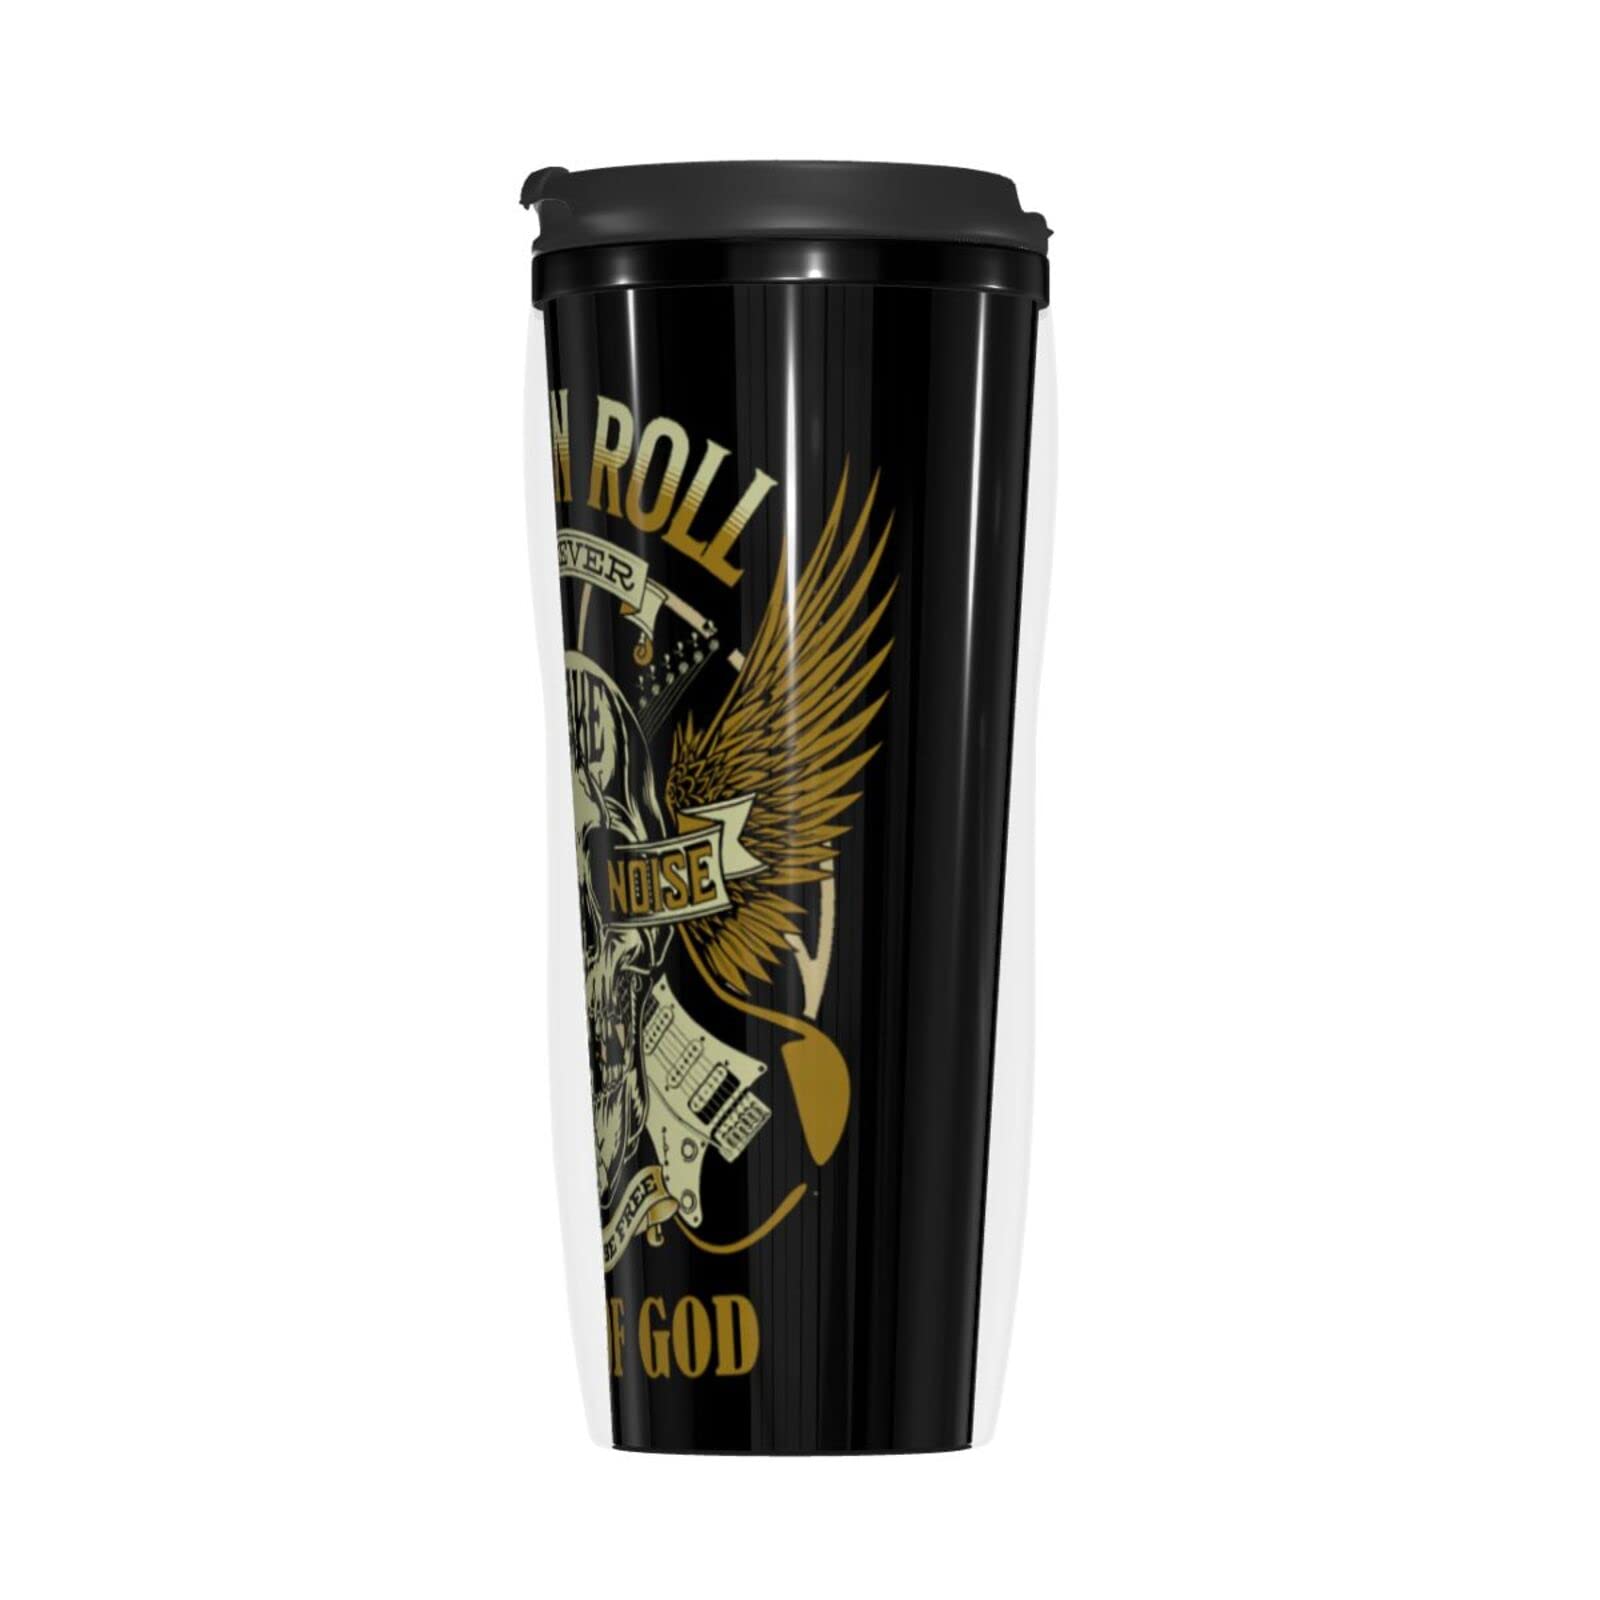 LOREBUTY Lamb Rock of God Band Coffee Mug With Lids 12oz Insulated Car Mugs Double Wall Vacuum Reusable Travel Coffee Tumbler For Hot/Ice Drinks Coffee Teas